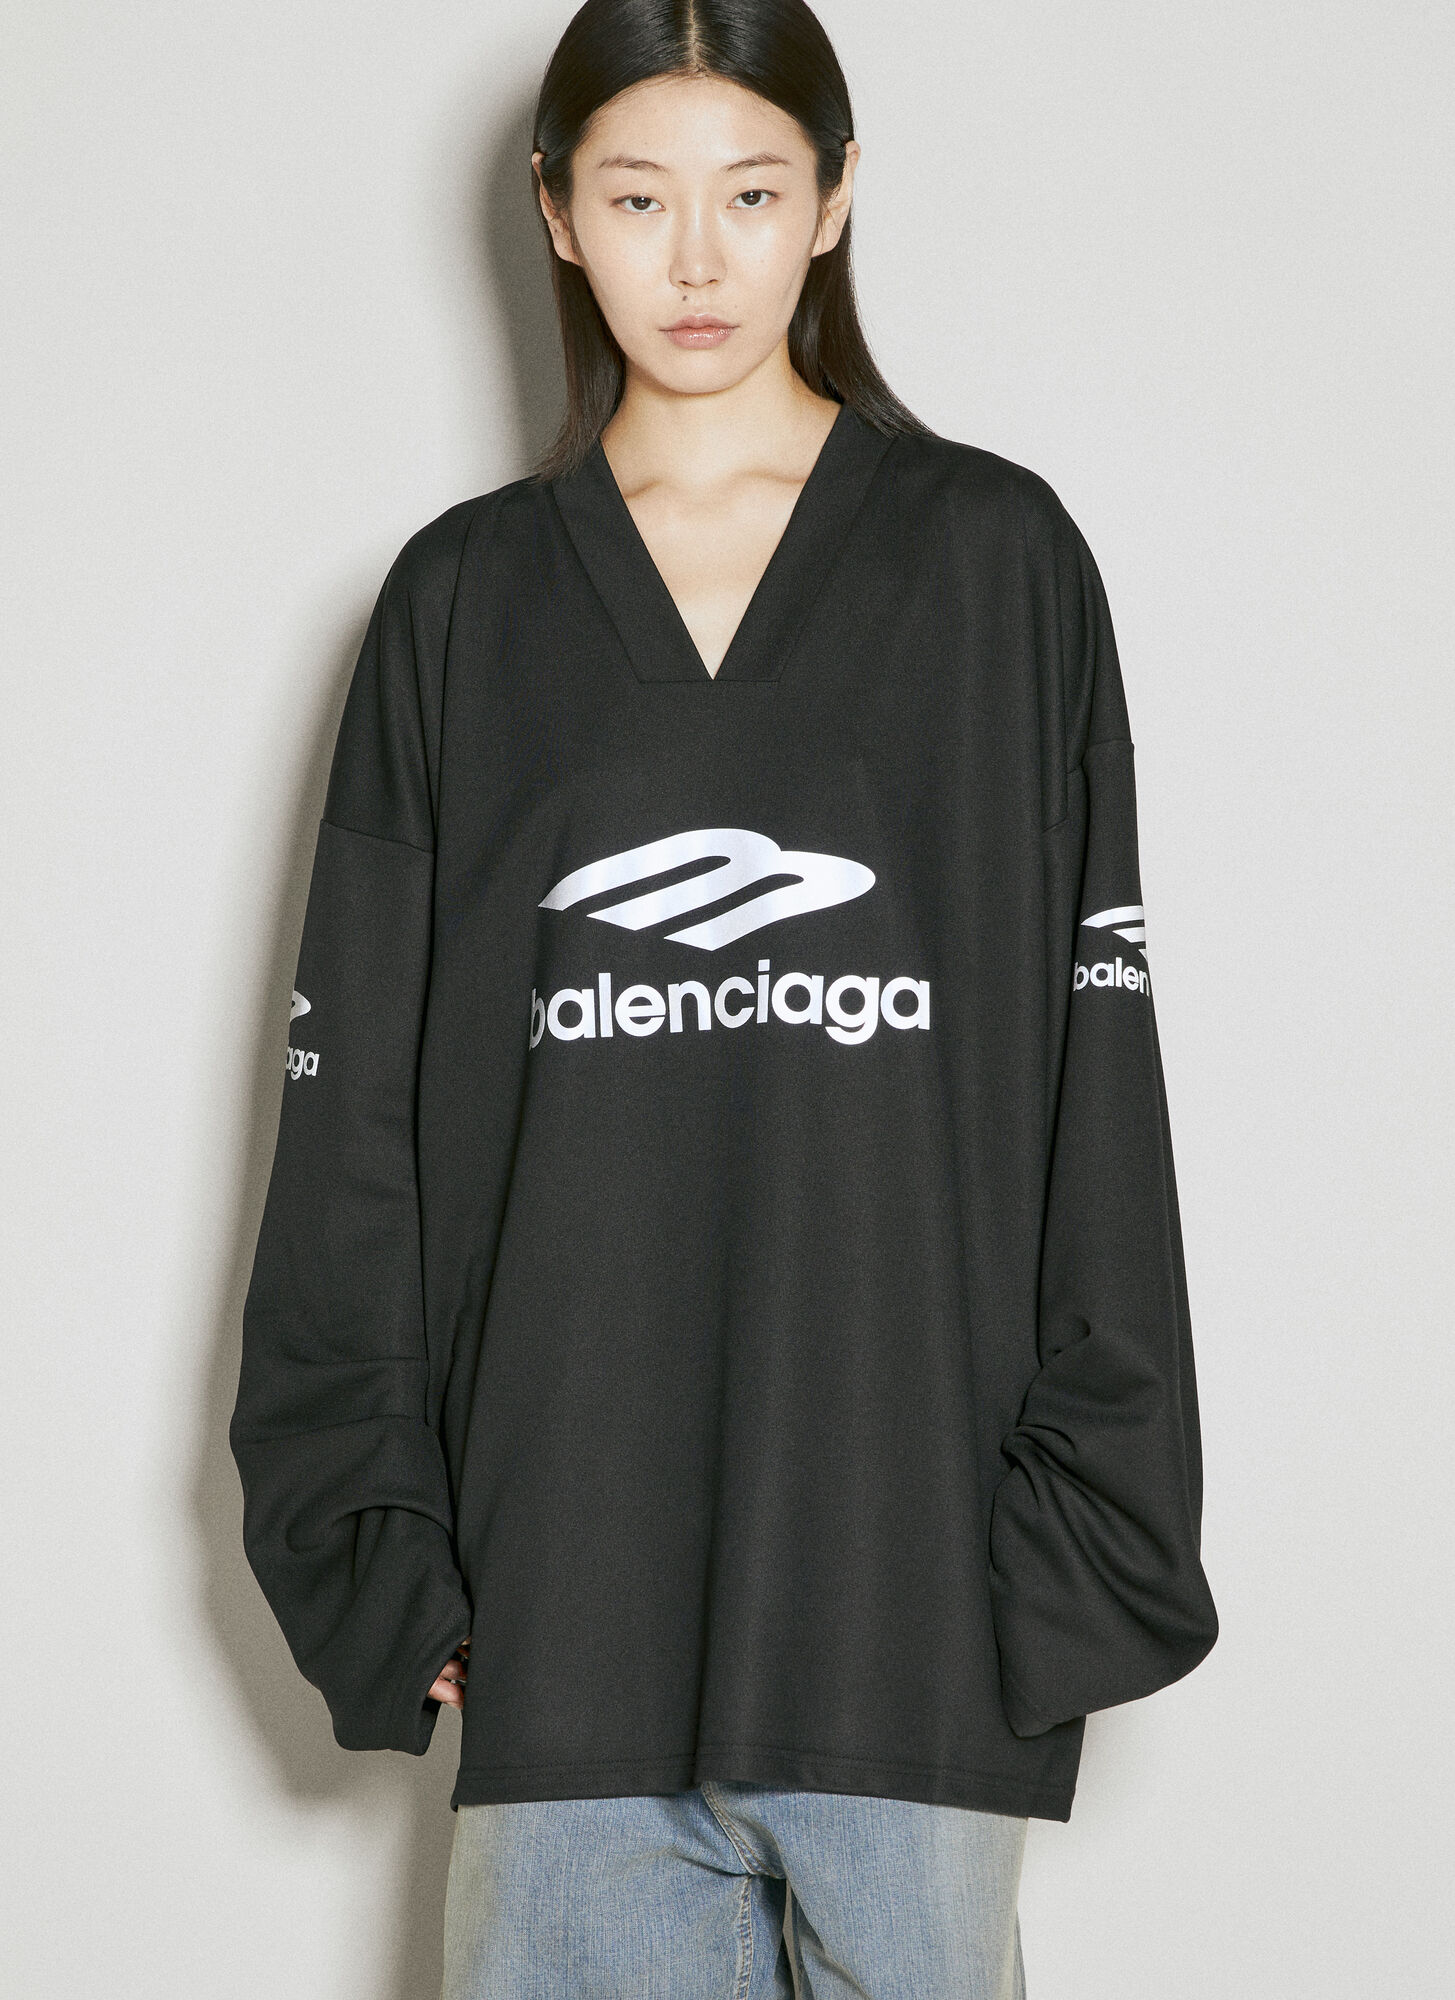 Balenciaga 3b Sports Icon Ski T-shirt In Black